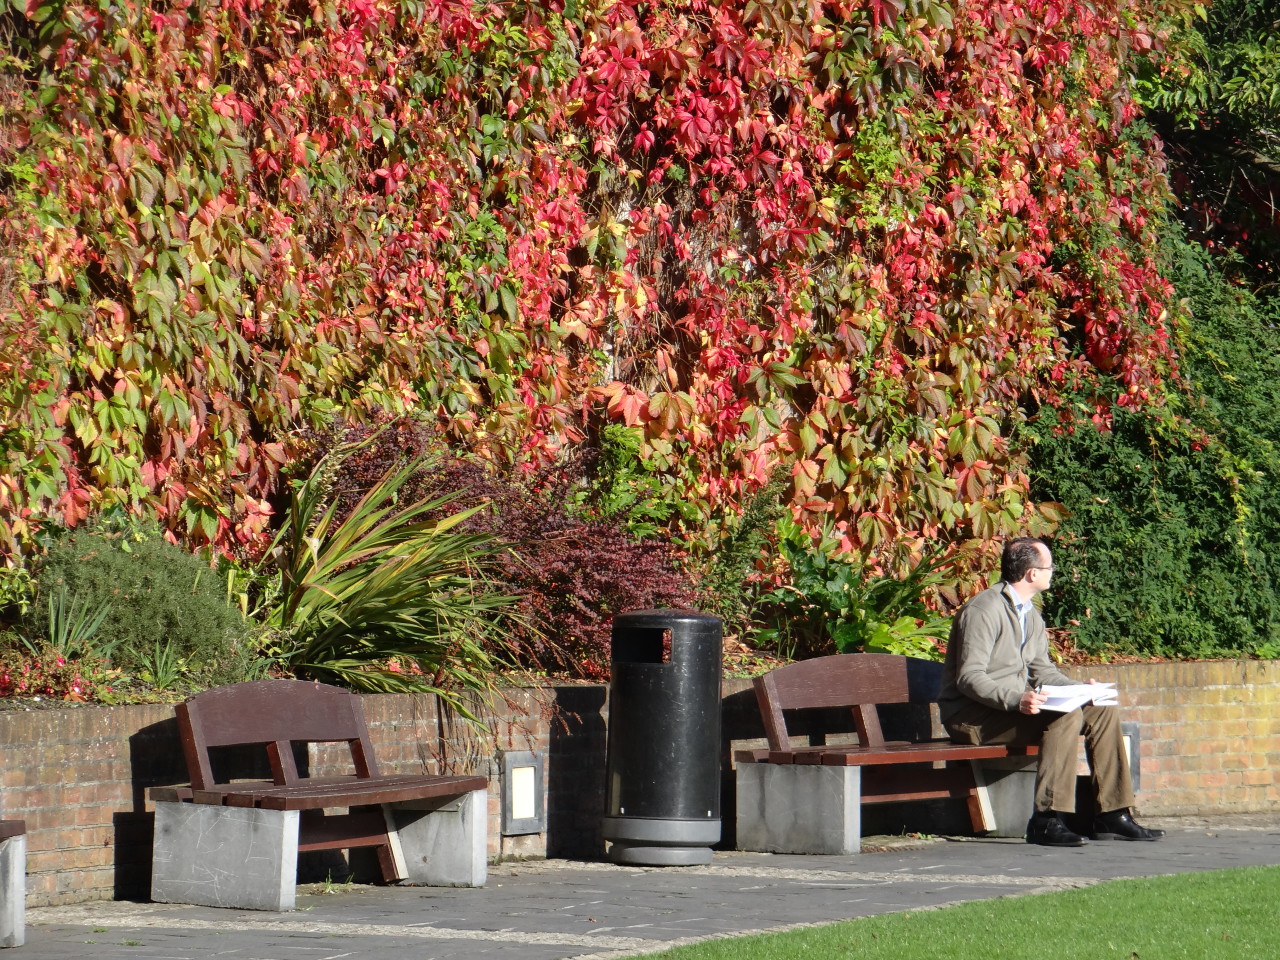 Fall colors in Dublin's park